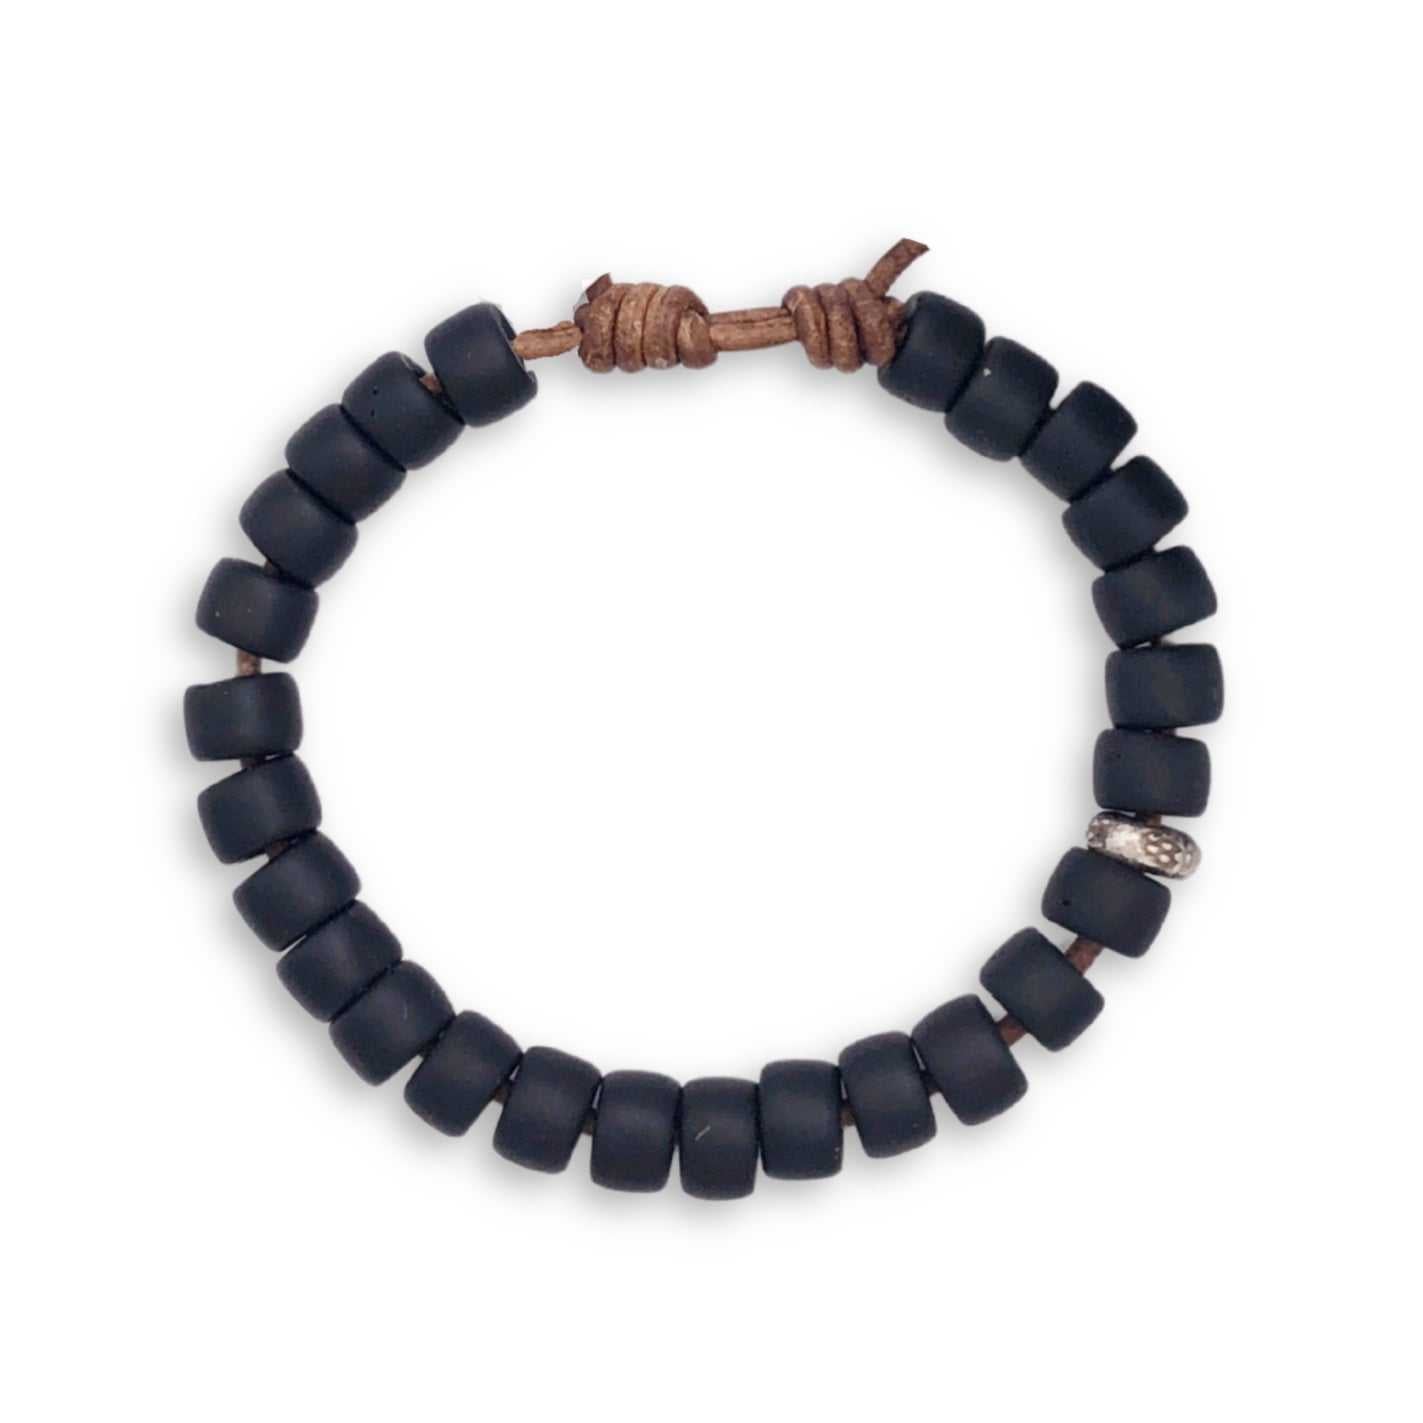 Black flat Sandcast African bead on leather